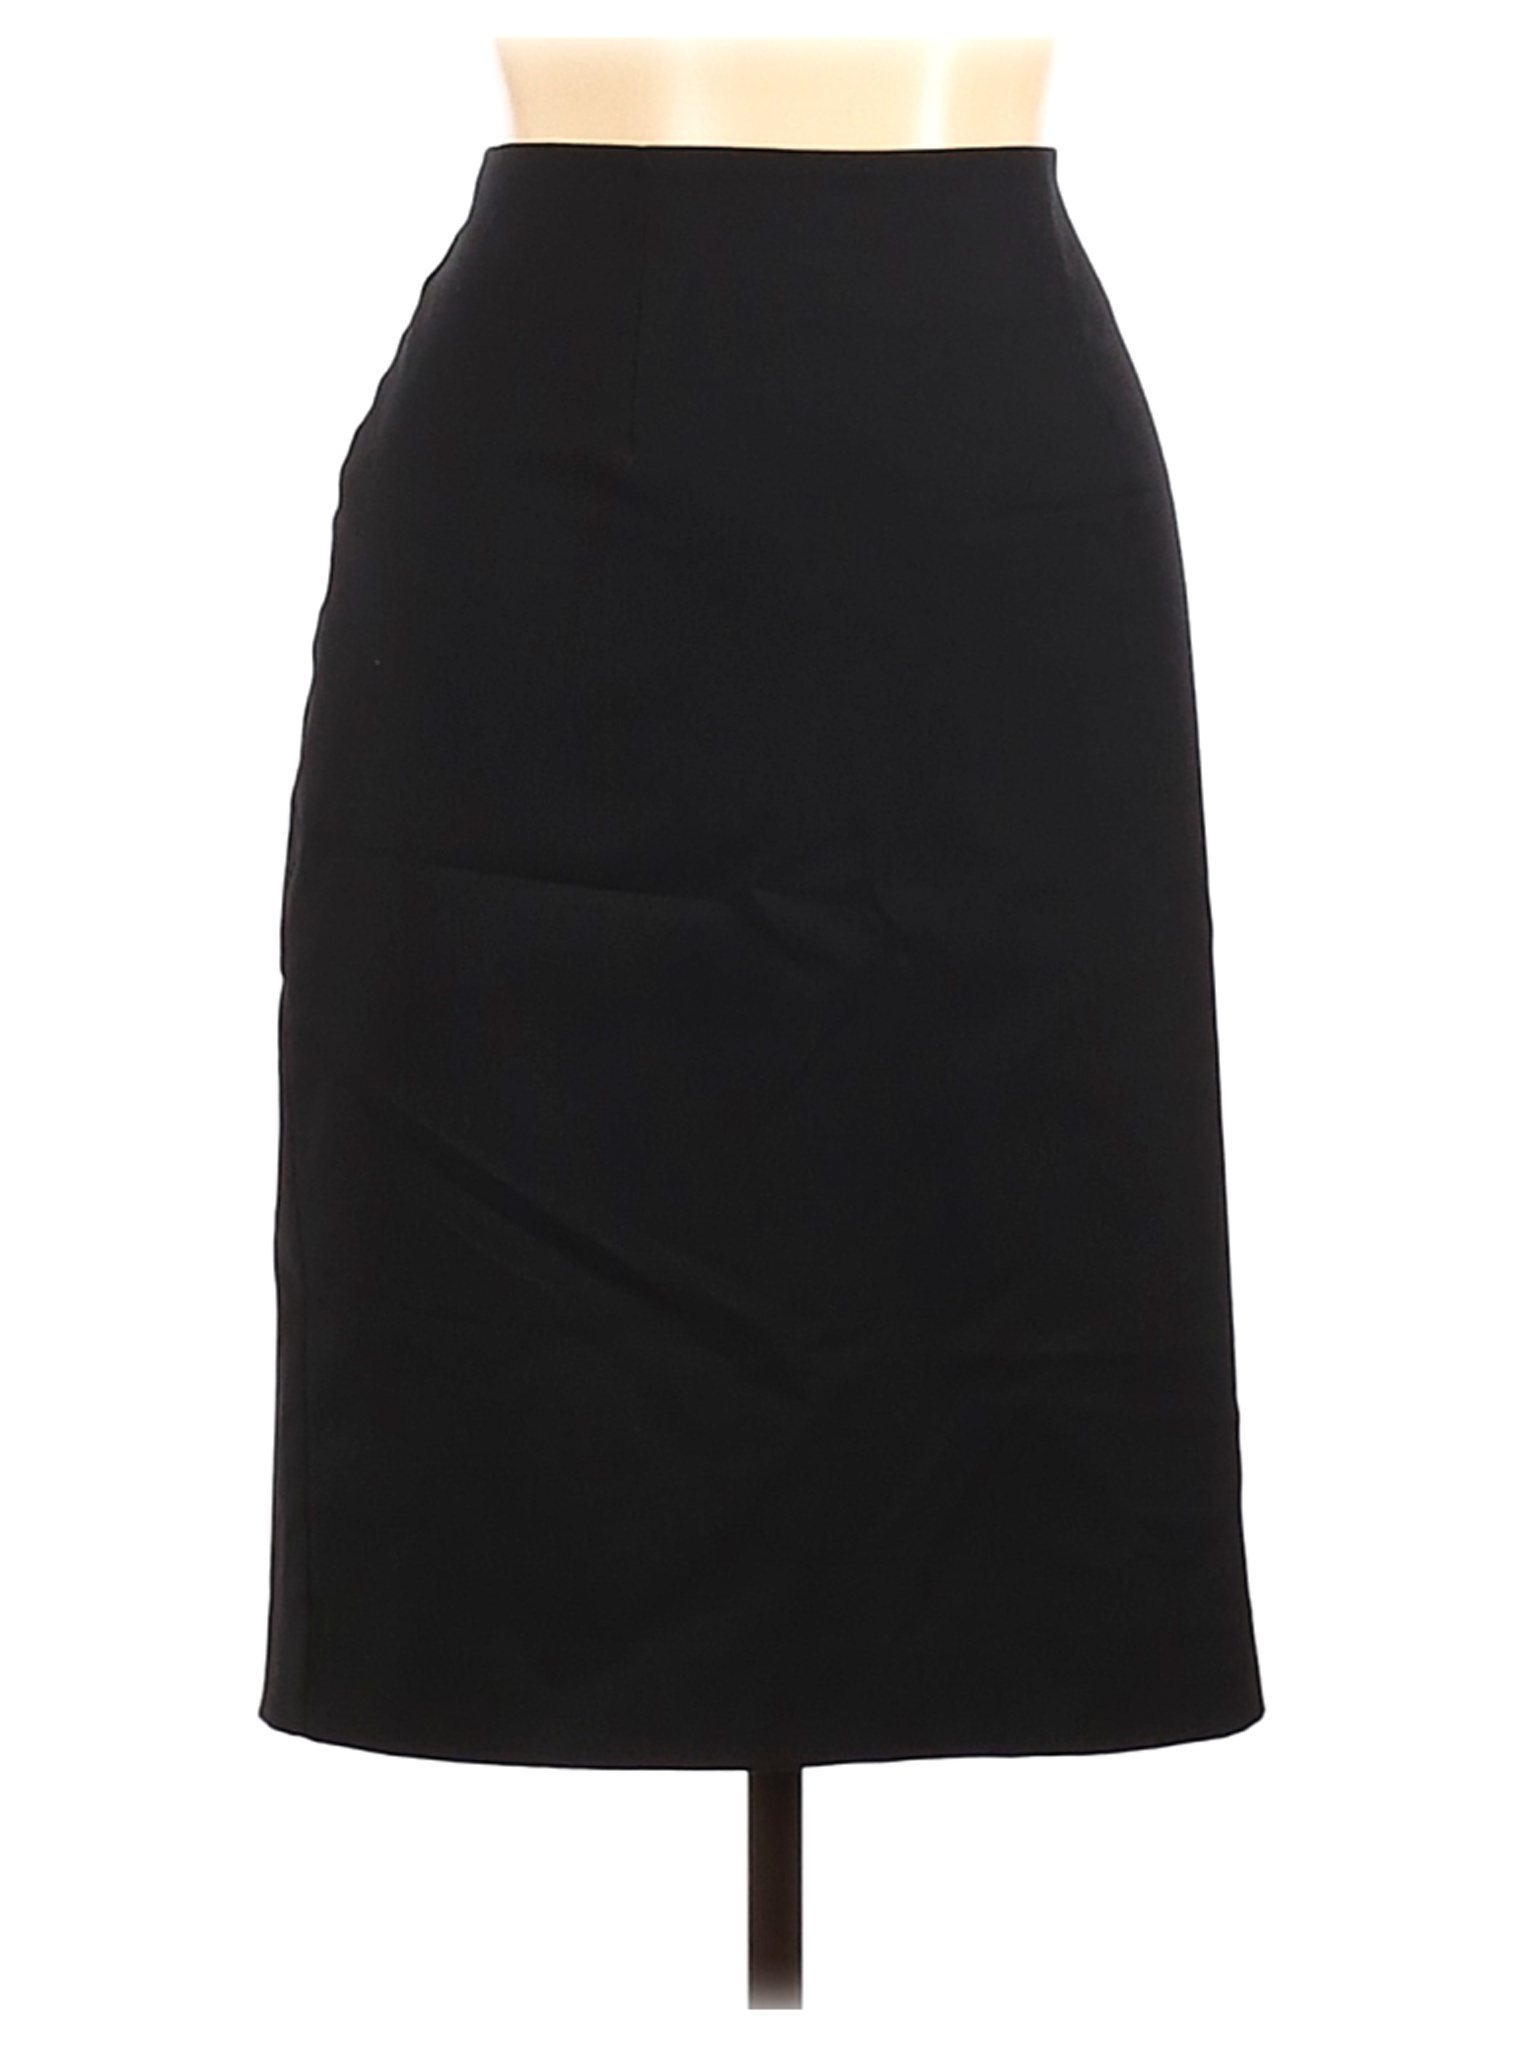 Merona Women Black Casual Skirt 12 | eBay